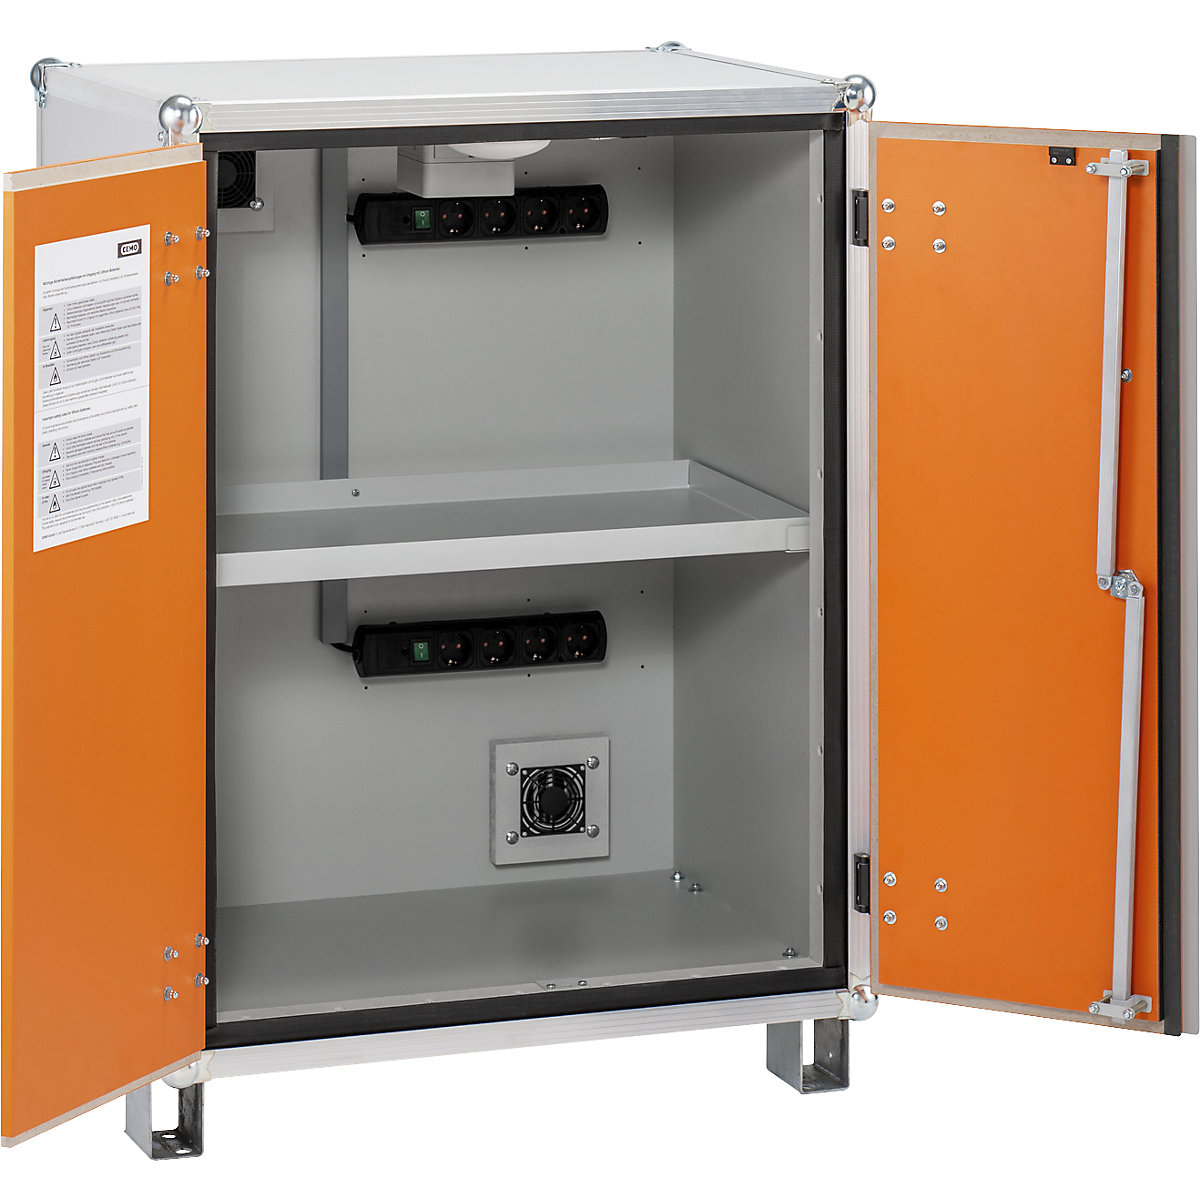 Veilige acculaadkast BASIC – CEMO, met voeten, hoogte 1110 mm, 400 V, oranje/grijs-1